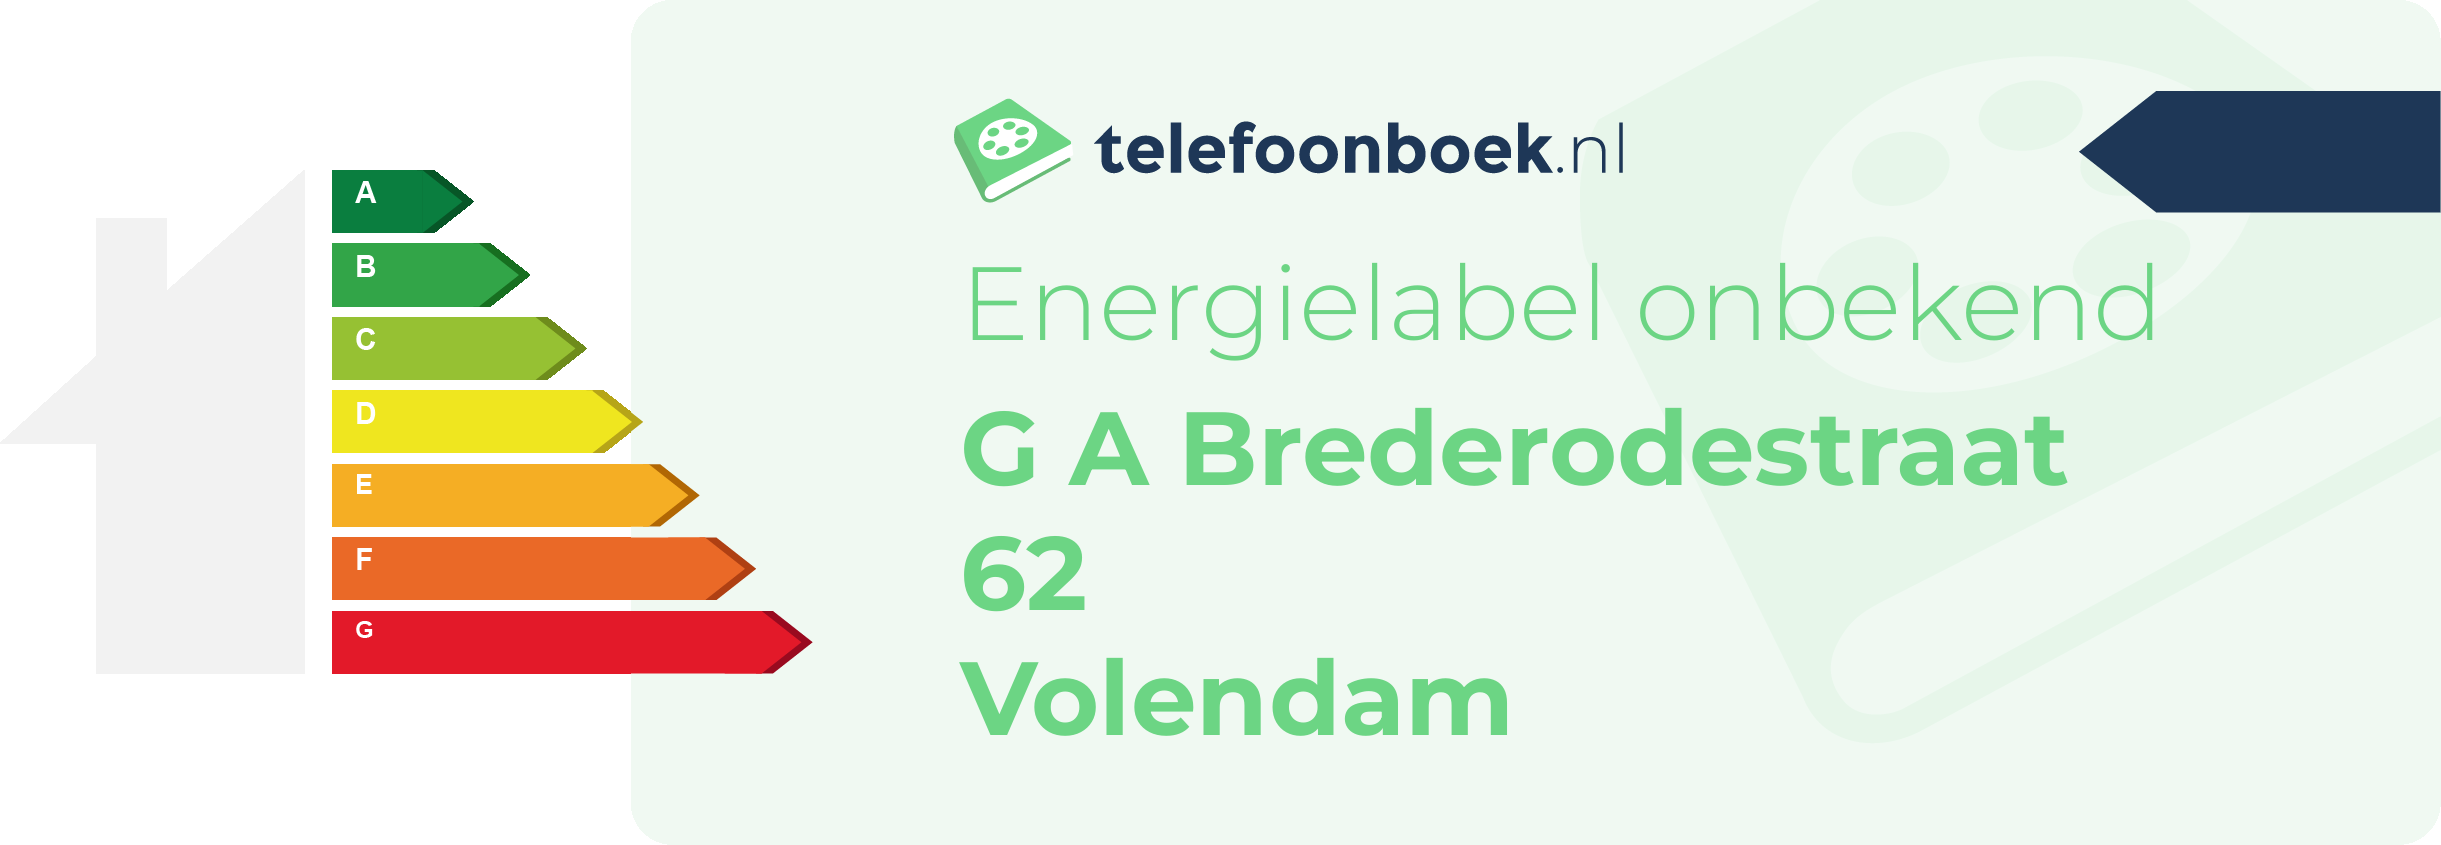 Energielabel G A Brederodestraat 62 Volendam